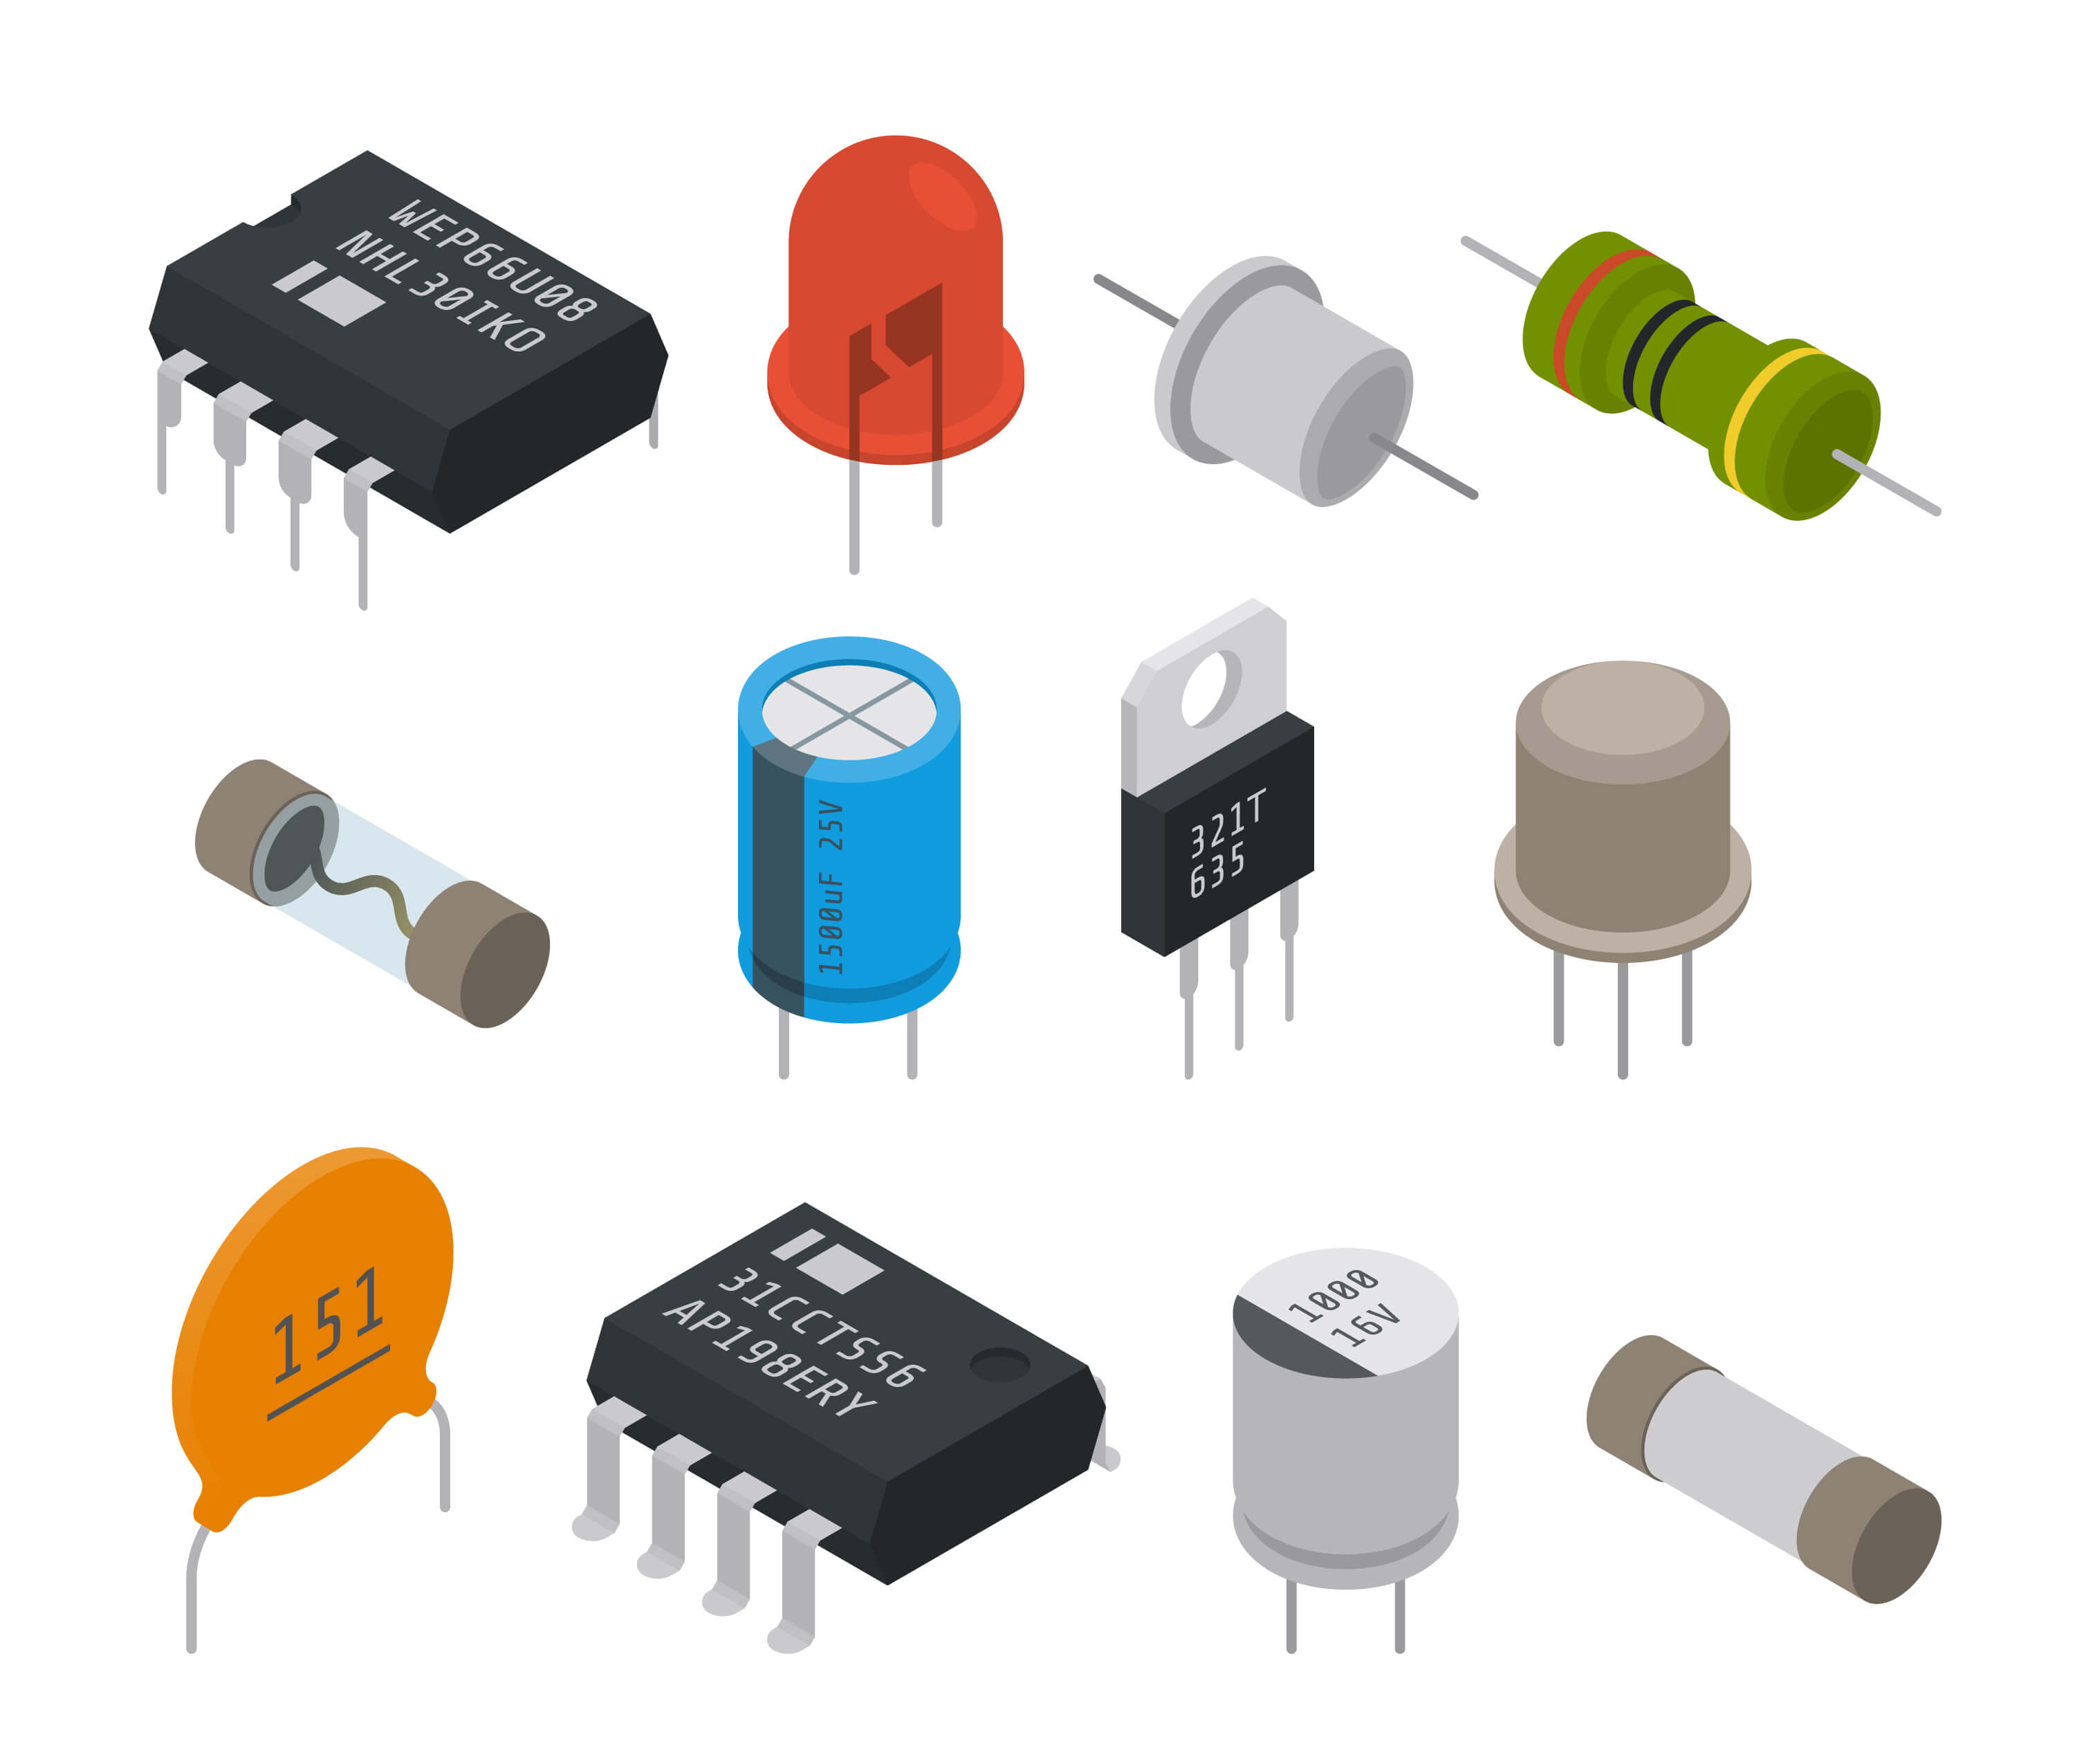 Halbleiter, Samwha Kondesatoren, Elektronische Bauelemente; semicondurctor, Samwha capacitor, electronic components